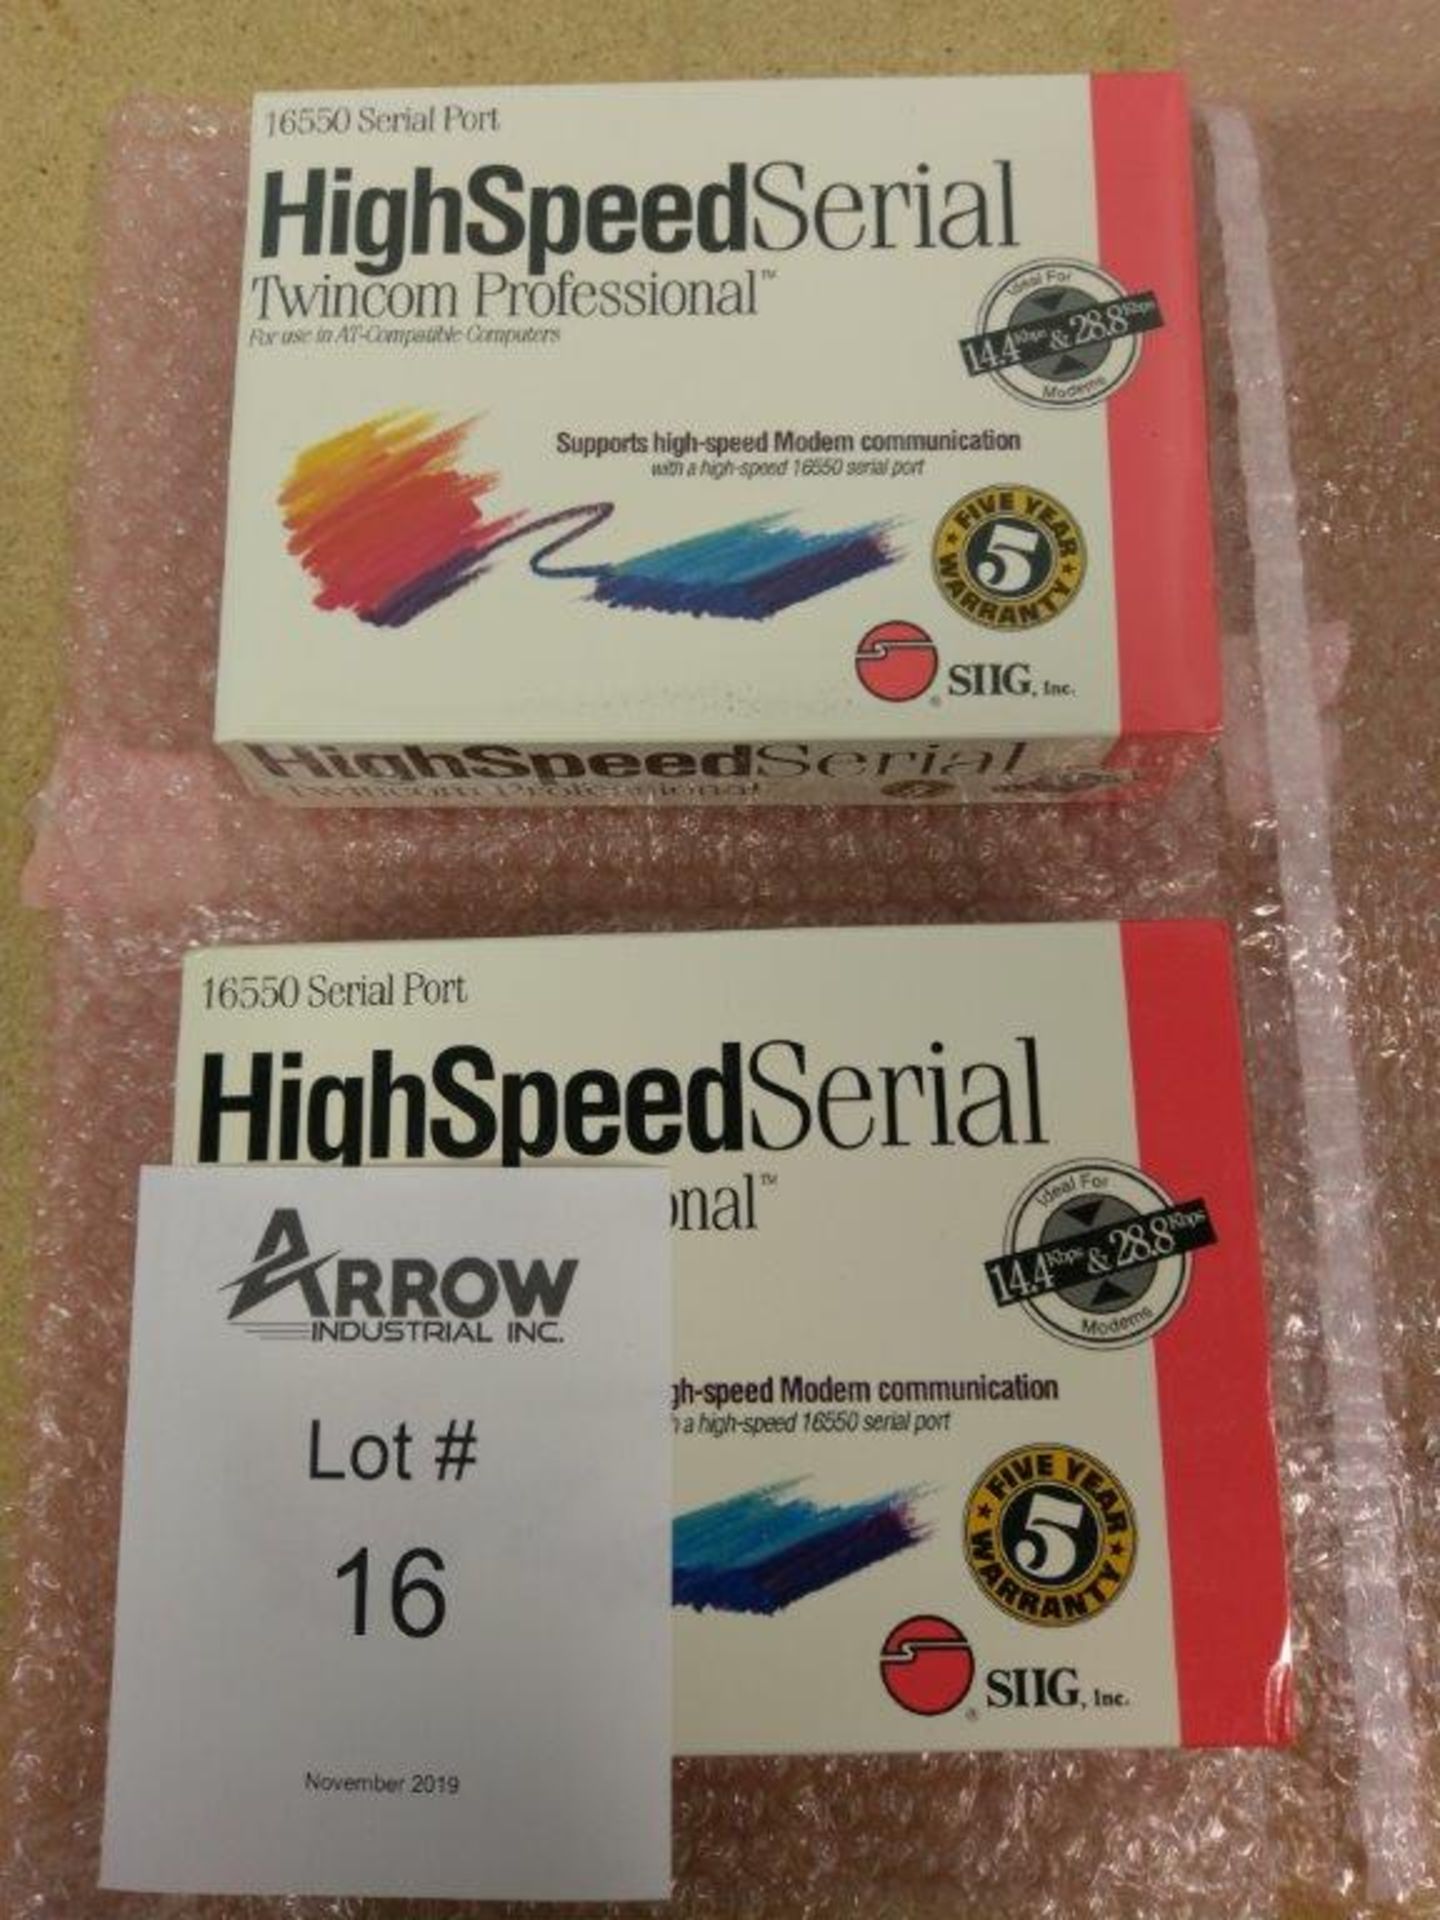 Lot of 2 Twincom Professional HighSpeedSerial 16550 Serial Port